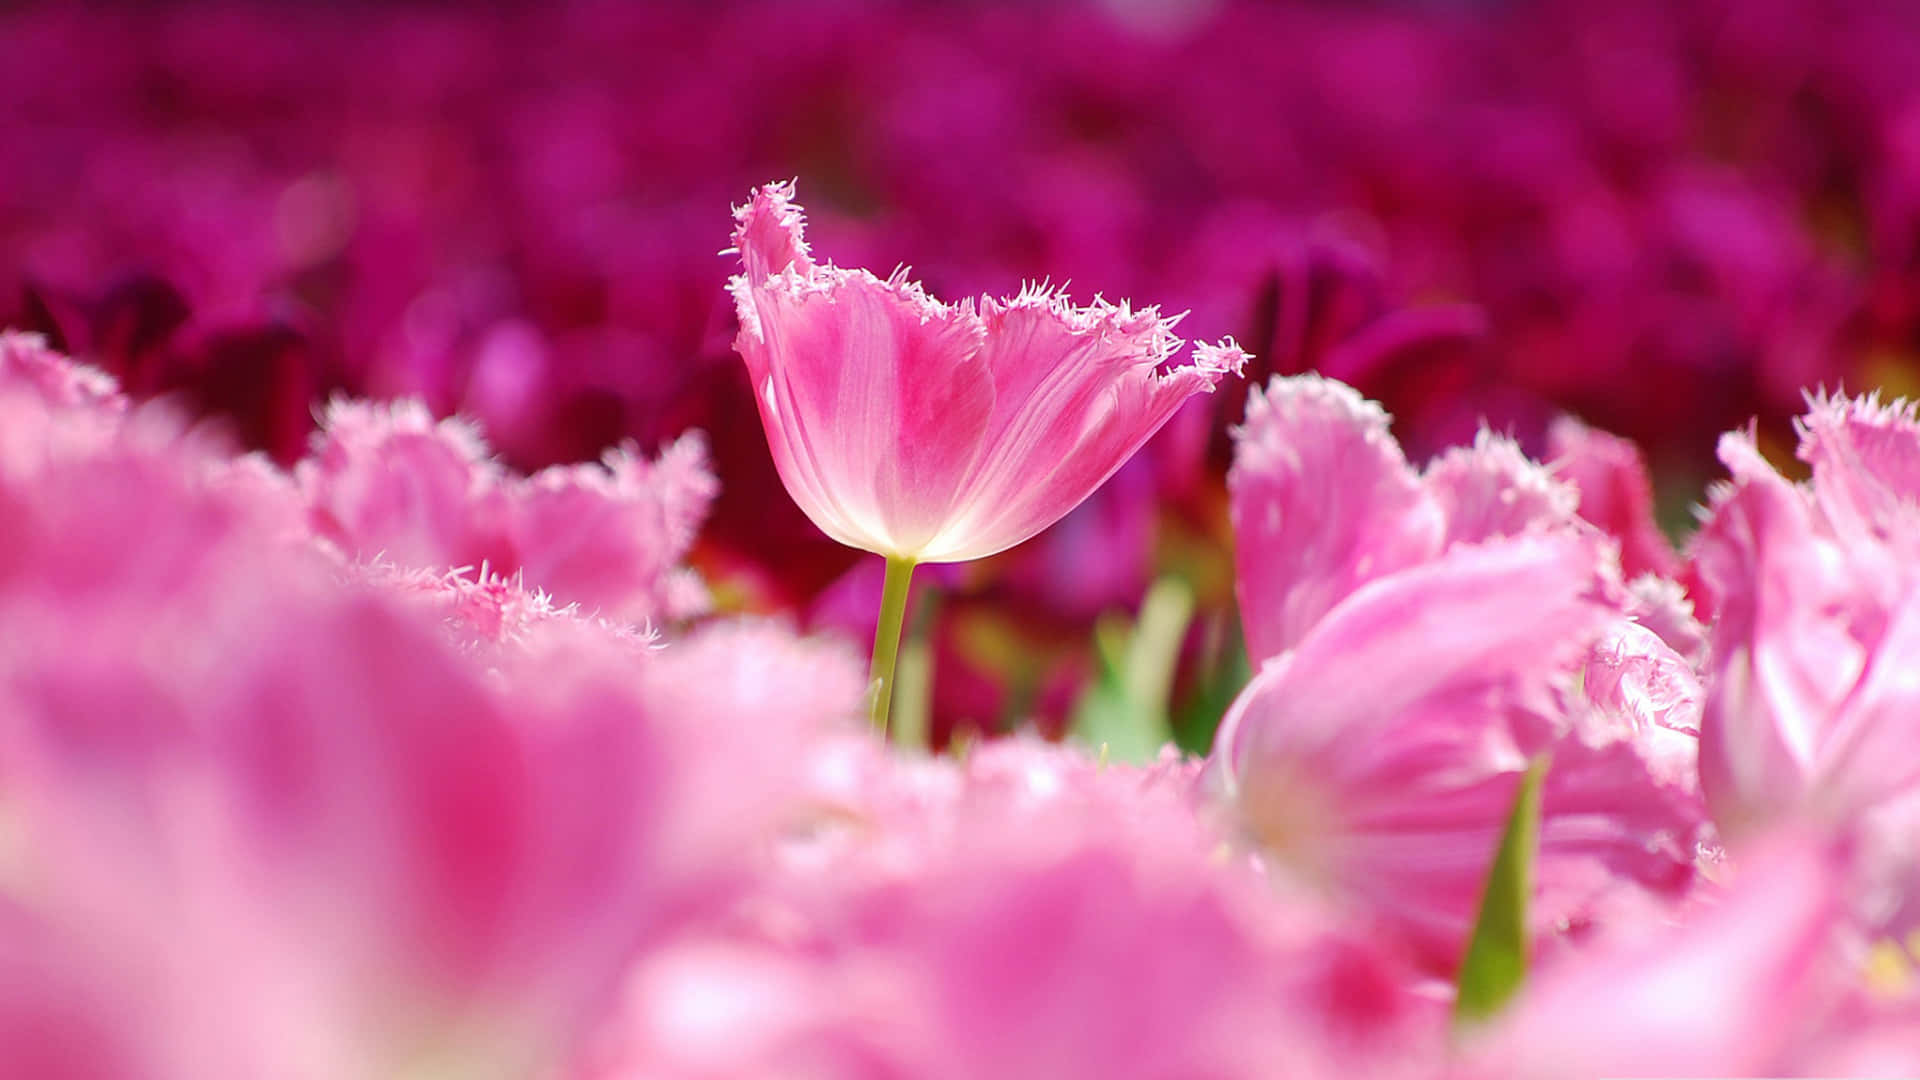 Flower Close-up Photography Desktop Pink Aesthetic Wallpaper